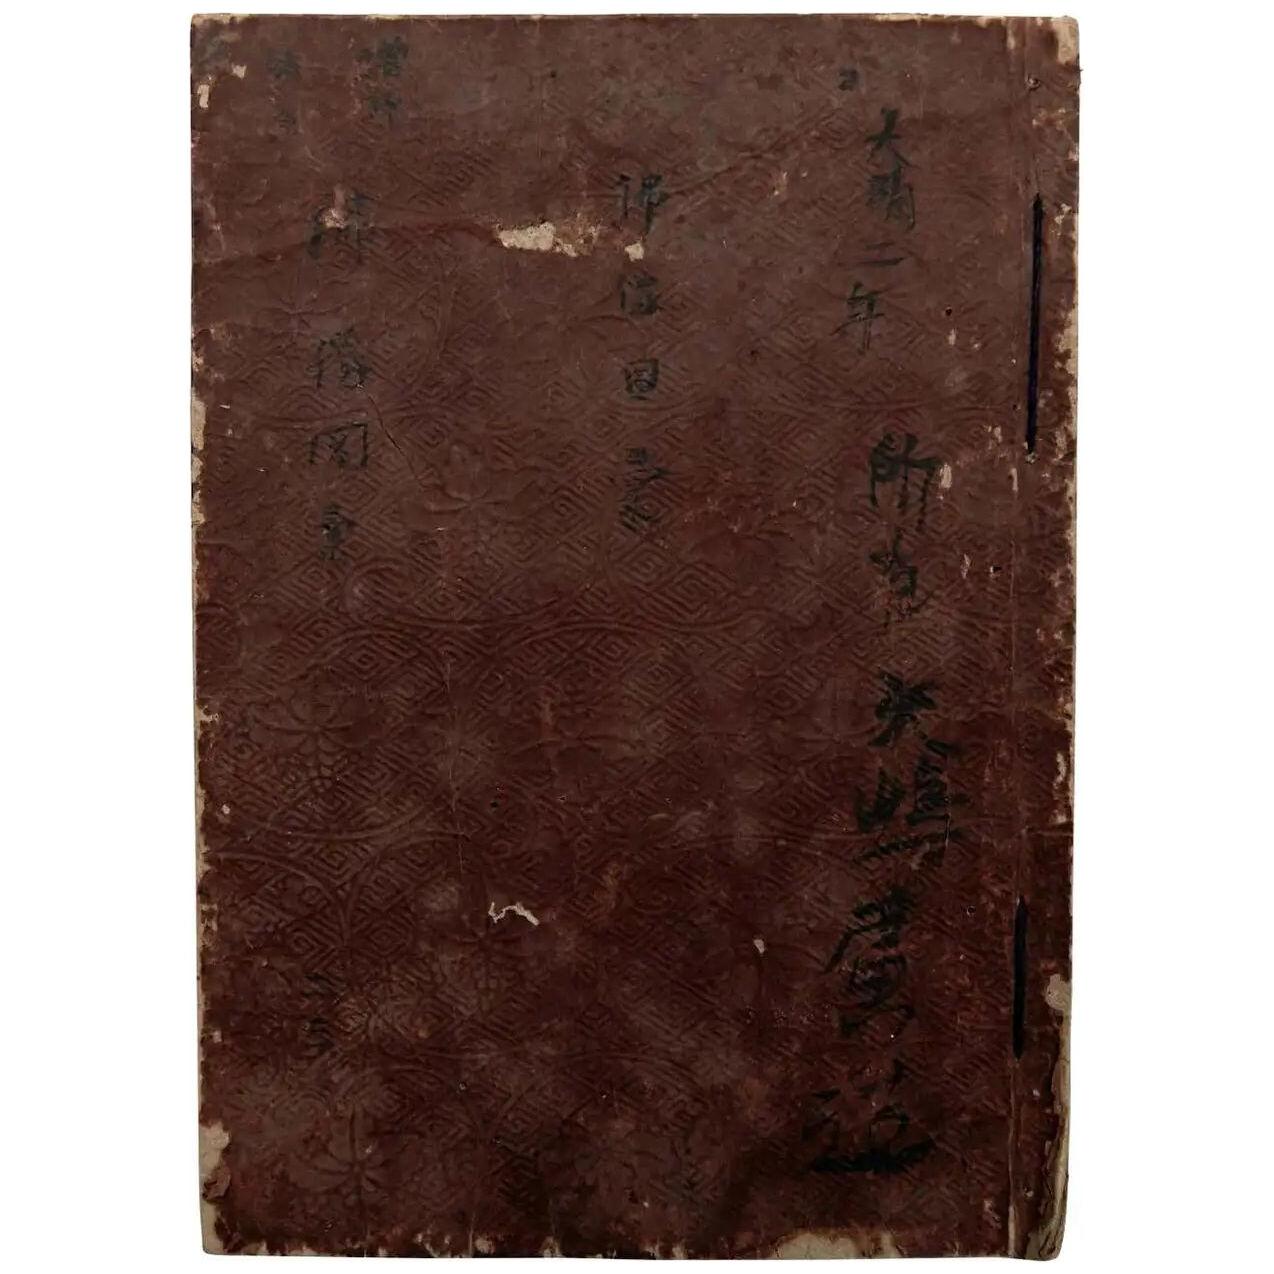 Antique Japanese Buddhism Book Edo Period, circa 1867